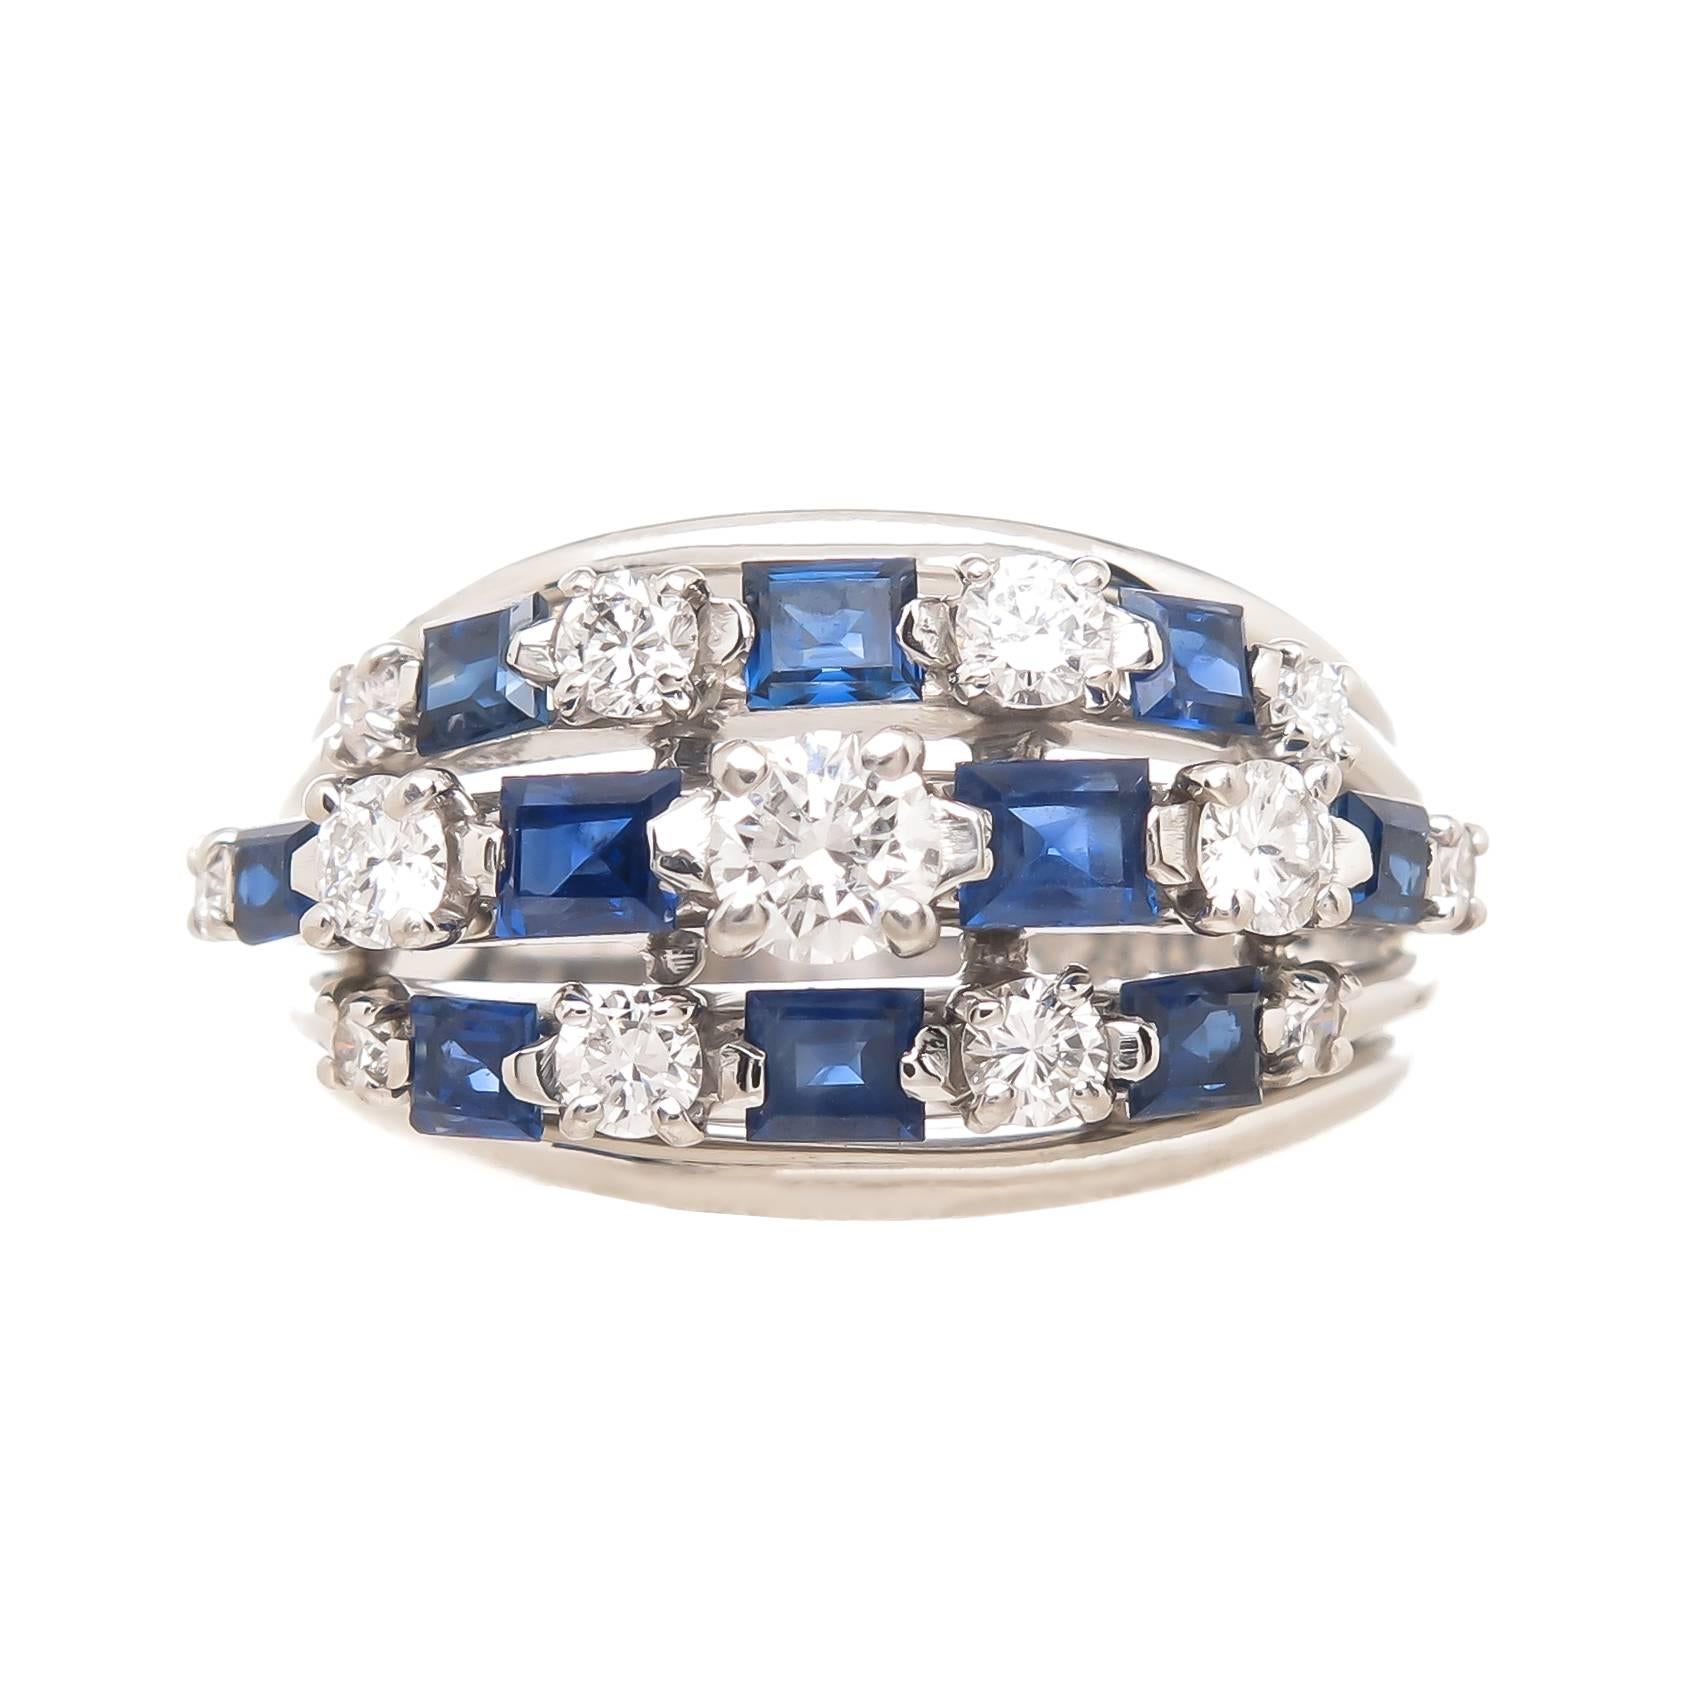 Oscar Heyman Platinum Diamond and Sapphire Ring